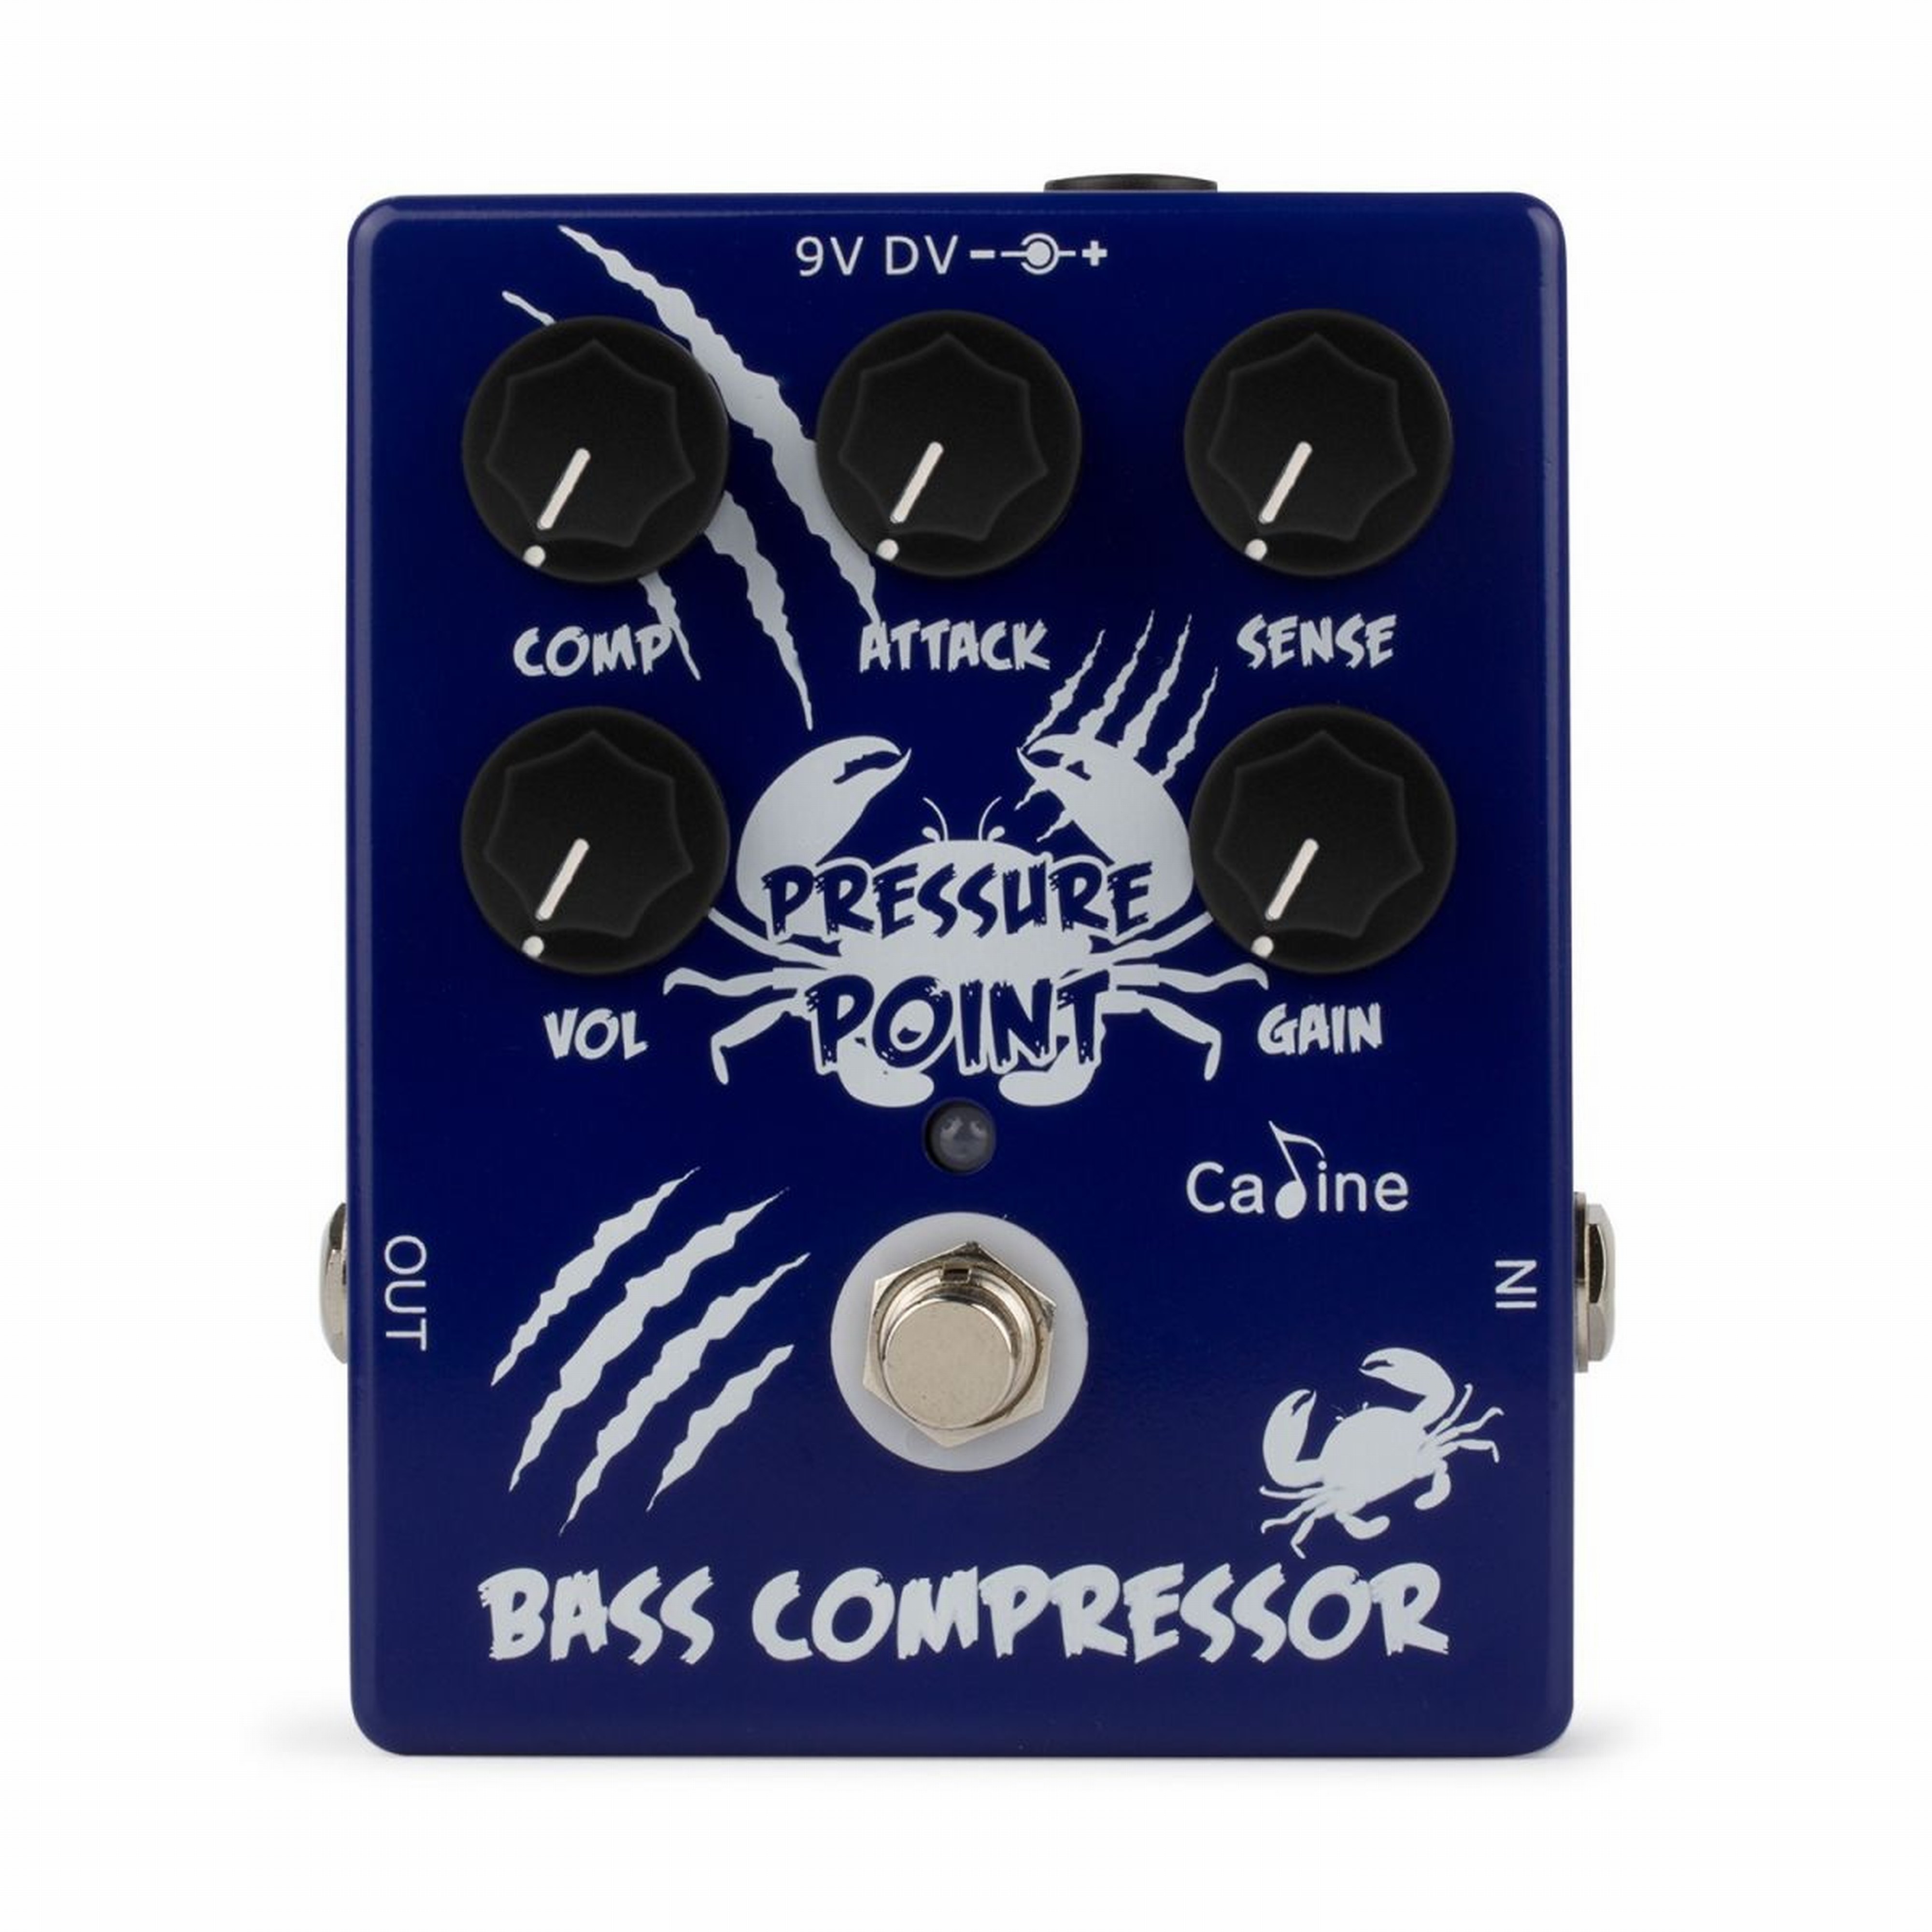 CP-45 “Pressure Point” Bass Compressor